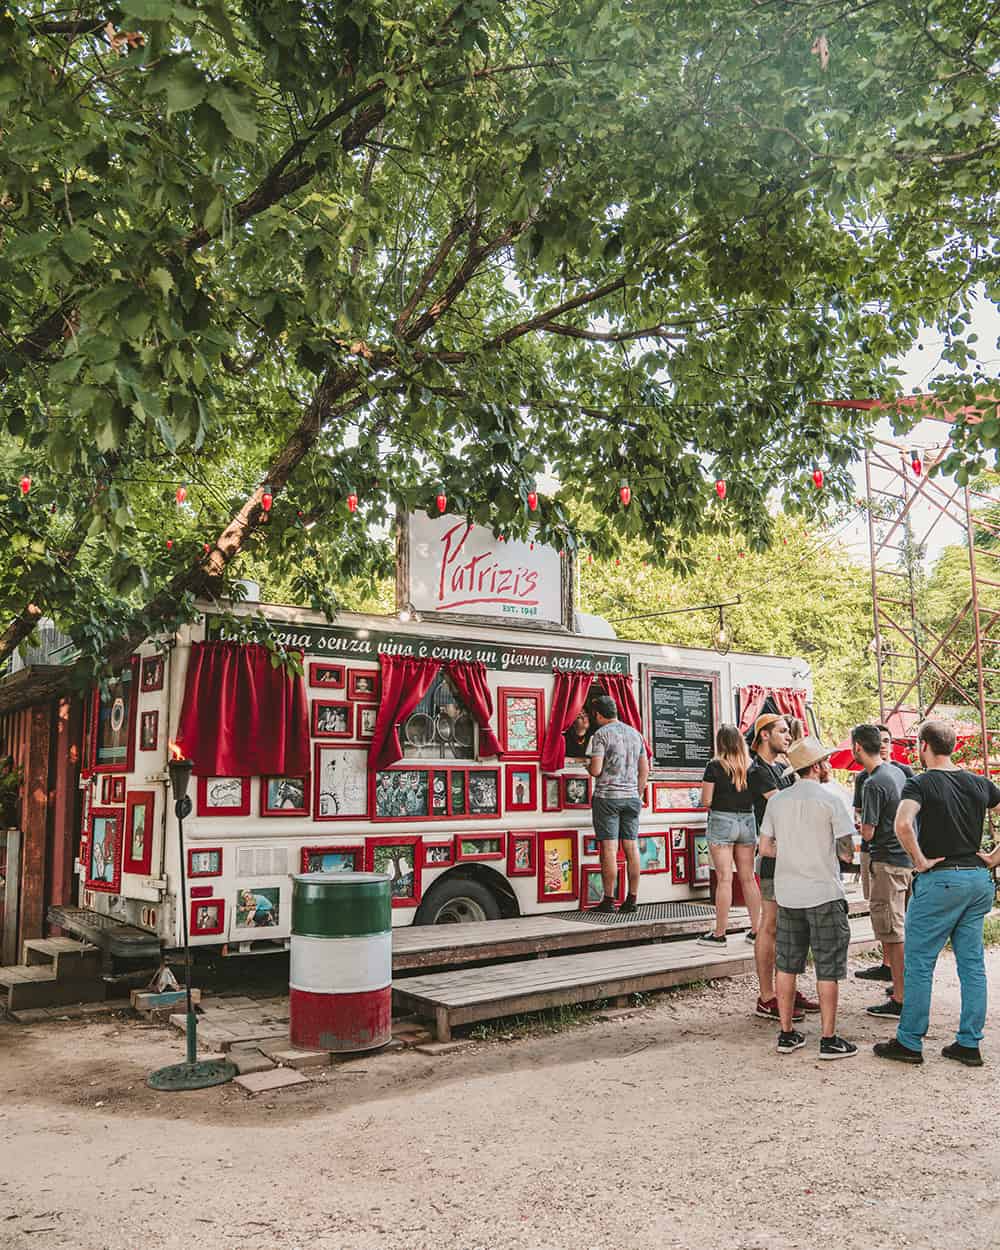 Patrizi's food truck in Austin Texas